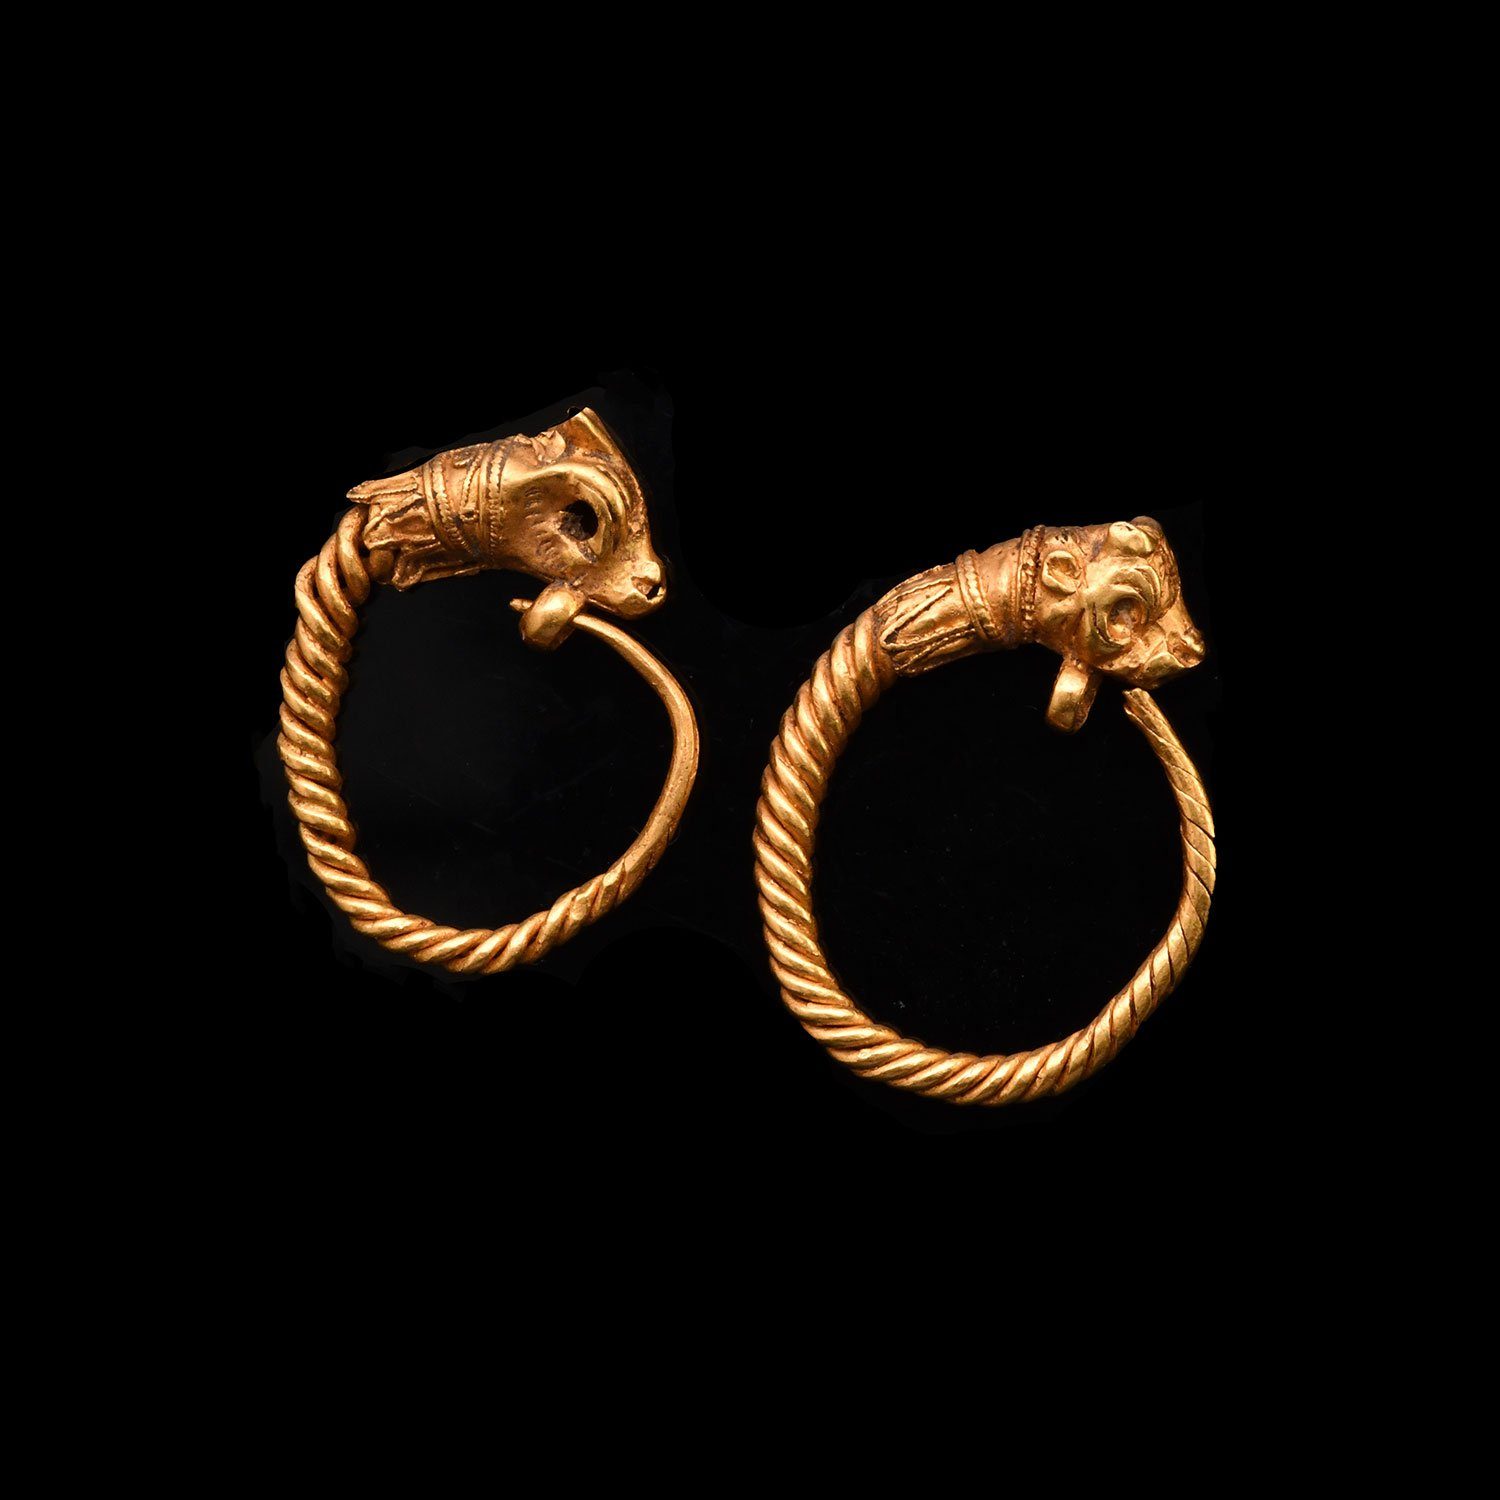 A fine pair of Greek Antelope Earrings, Hellenistic Period, ca. 3rd - 1st century BCE